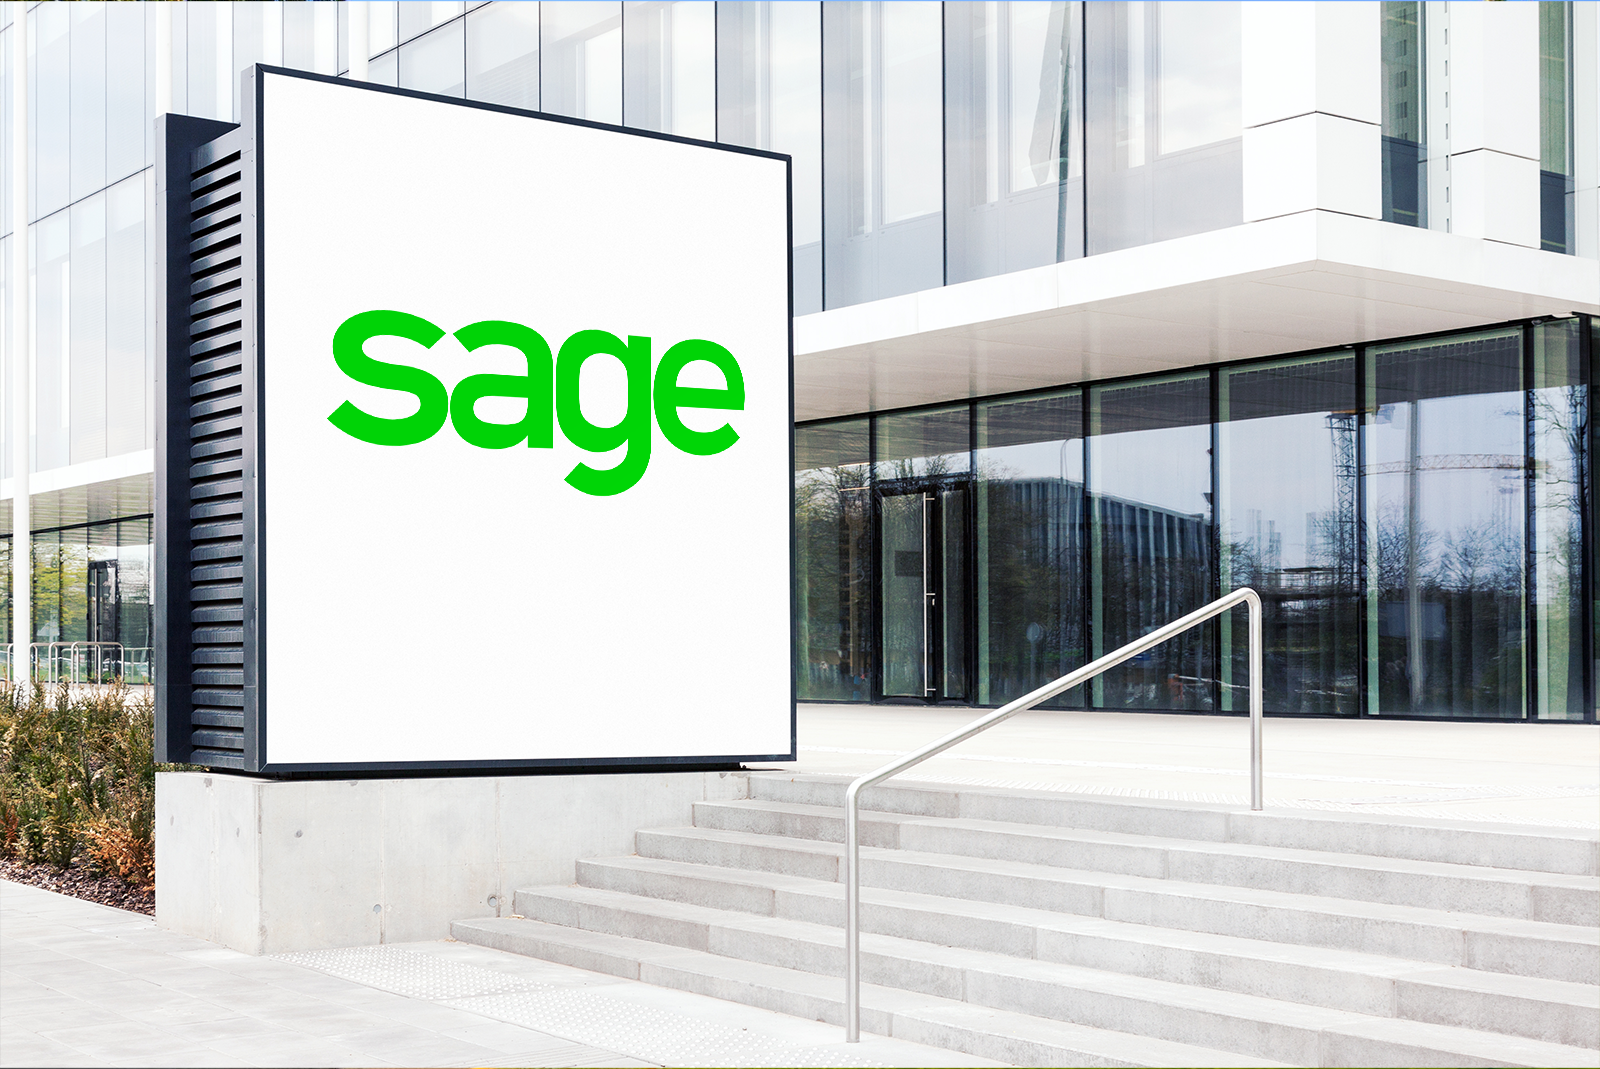 Sage office building